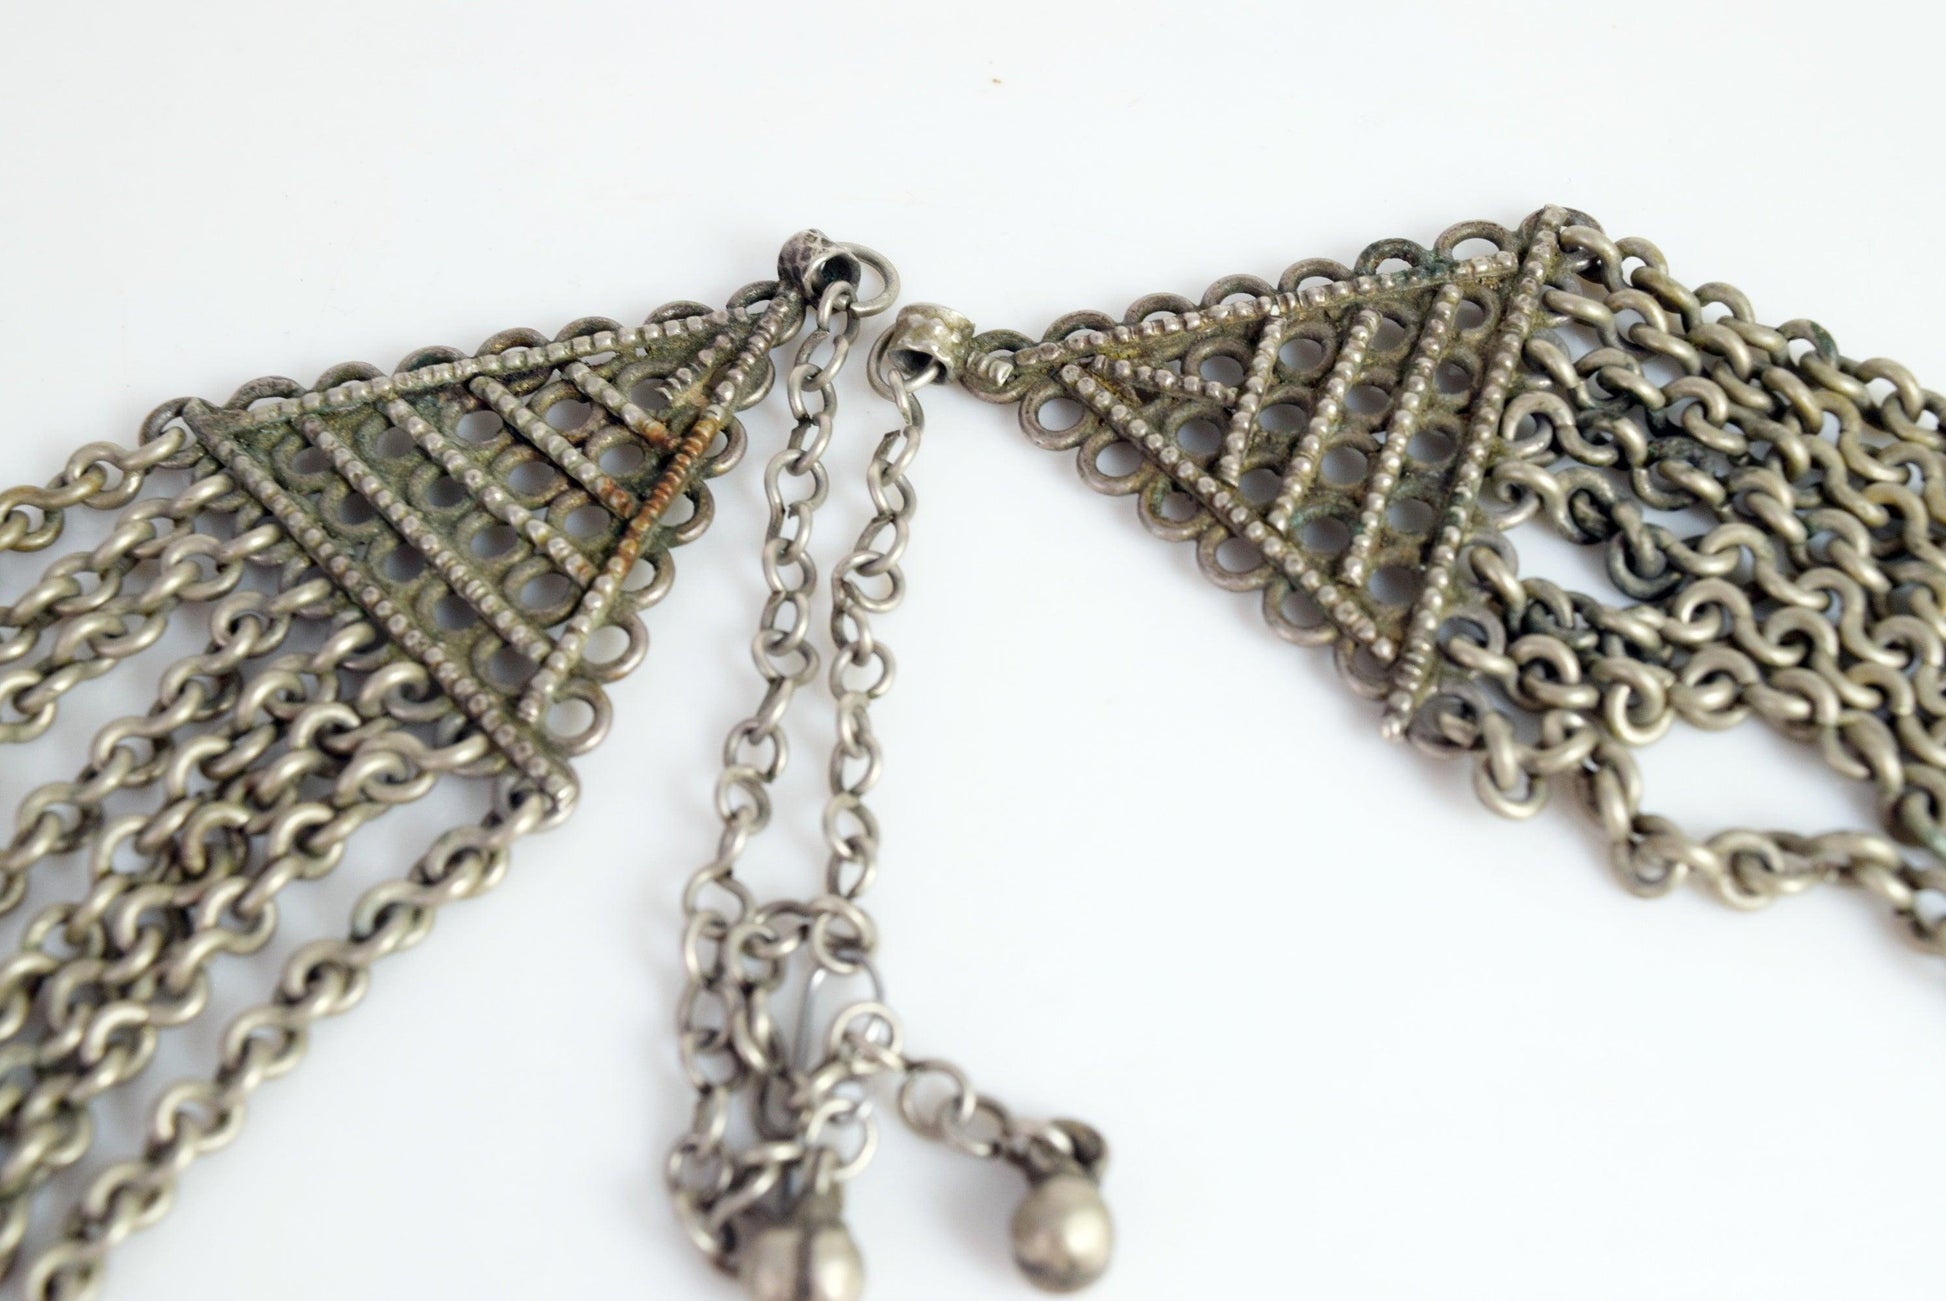 Bedouin necklace from the Arabian Peninsula